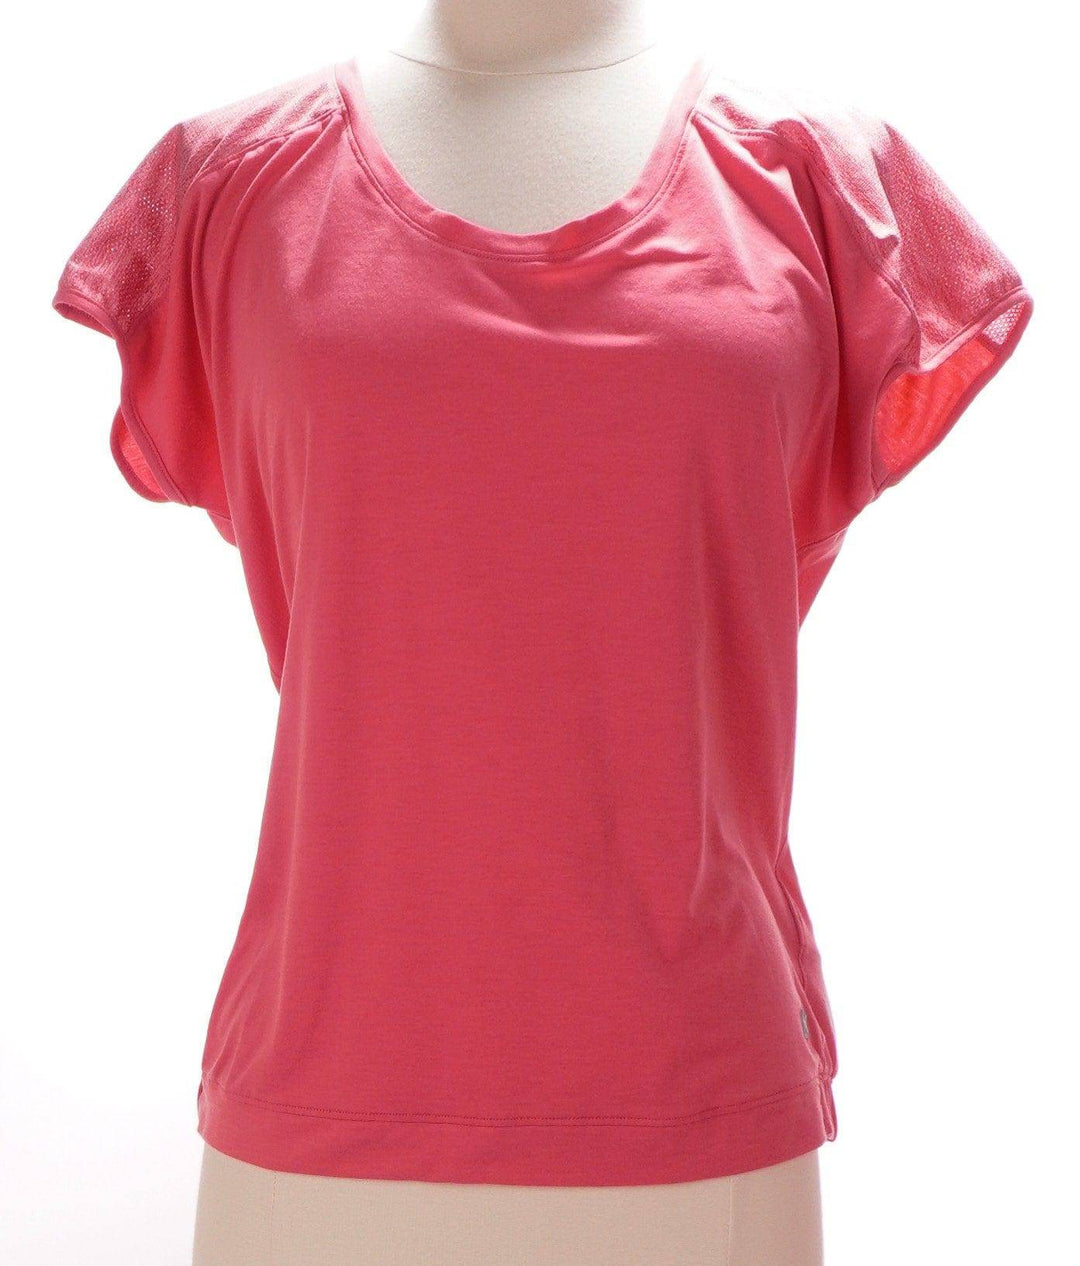 Puma Pink / Consigned / Medium Puma Short Sleeve Shirt - Pink - Size Medium